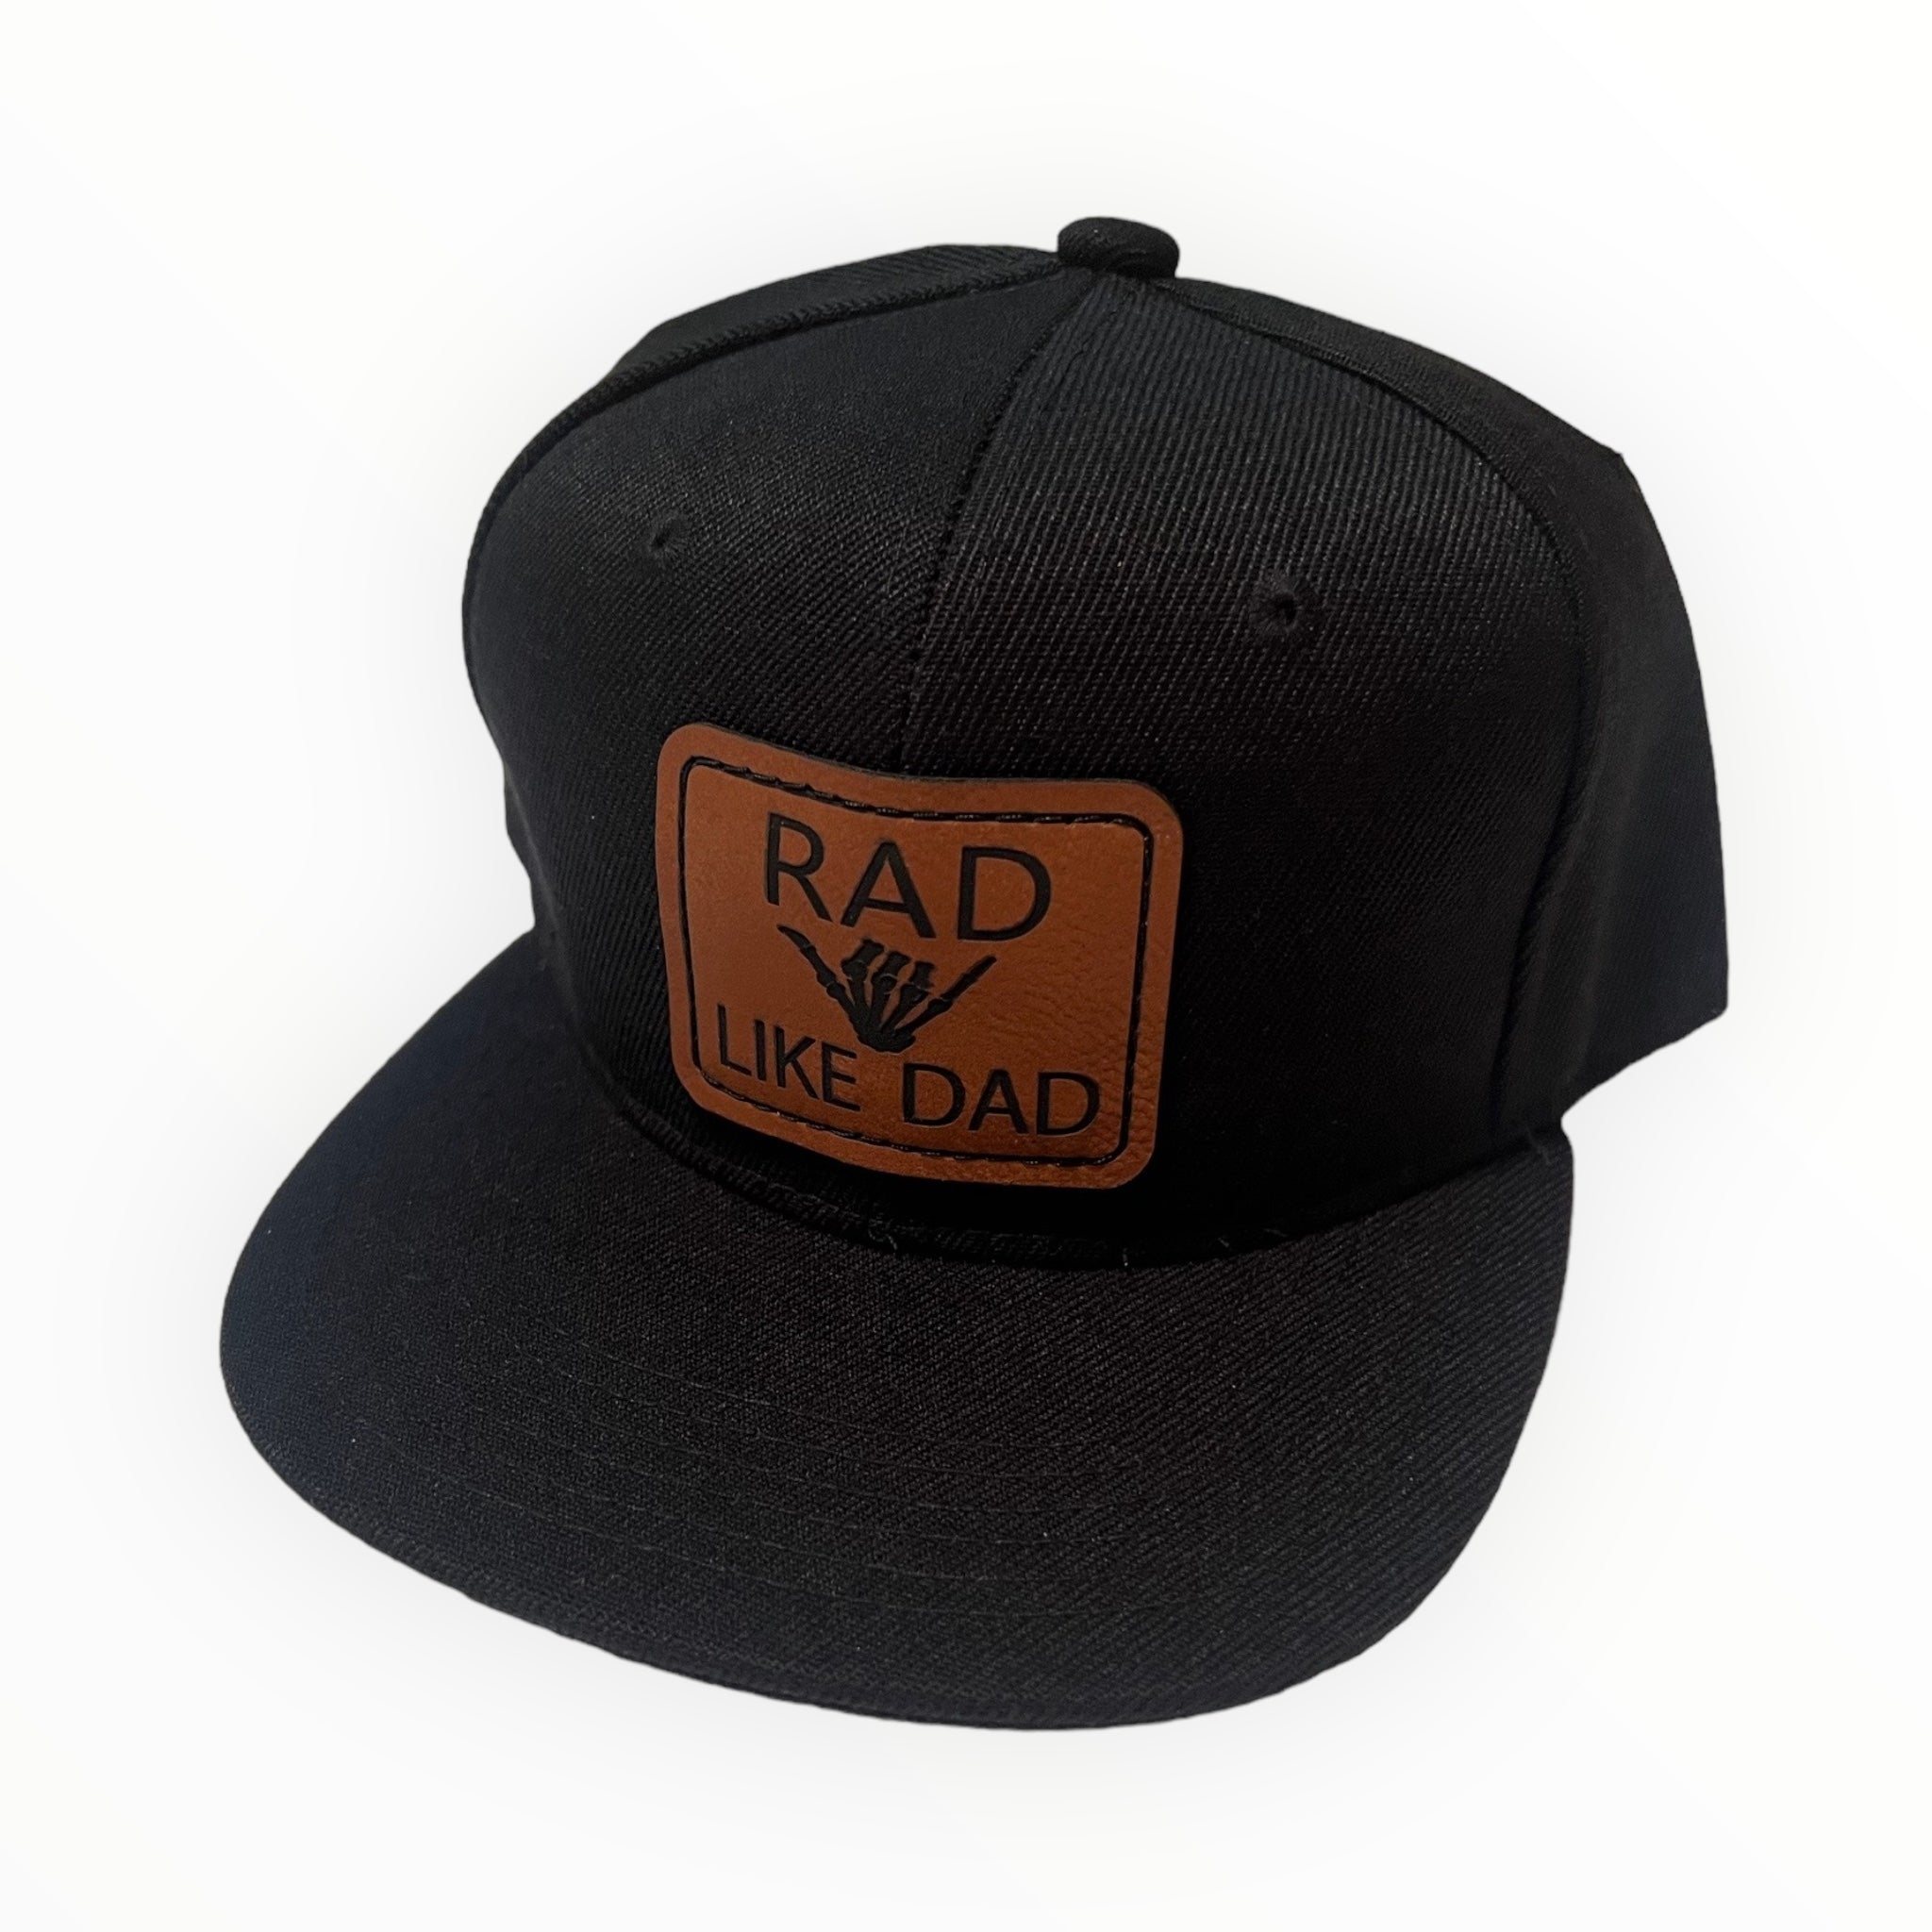 Rad Like Dad Black Hat